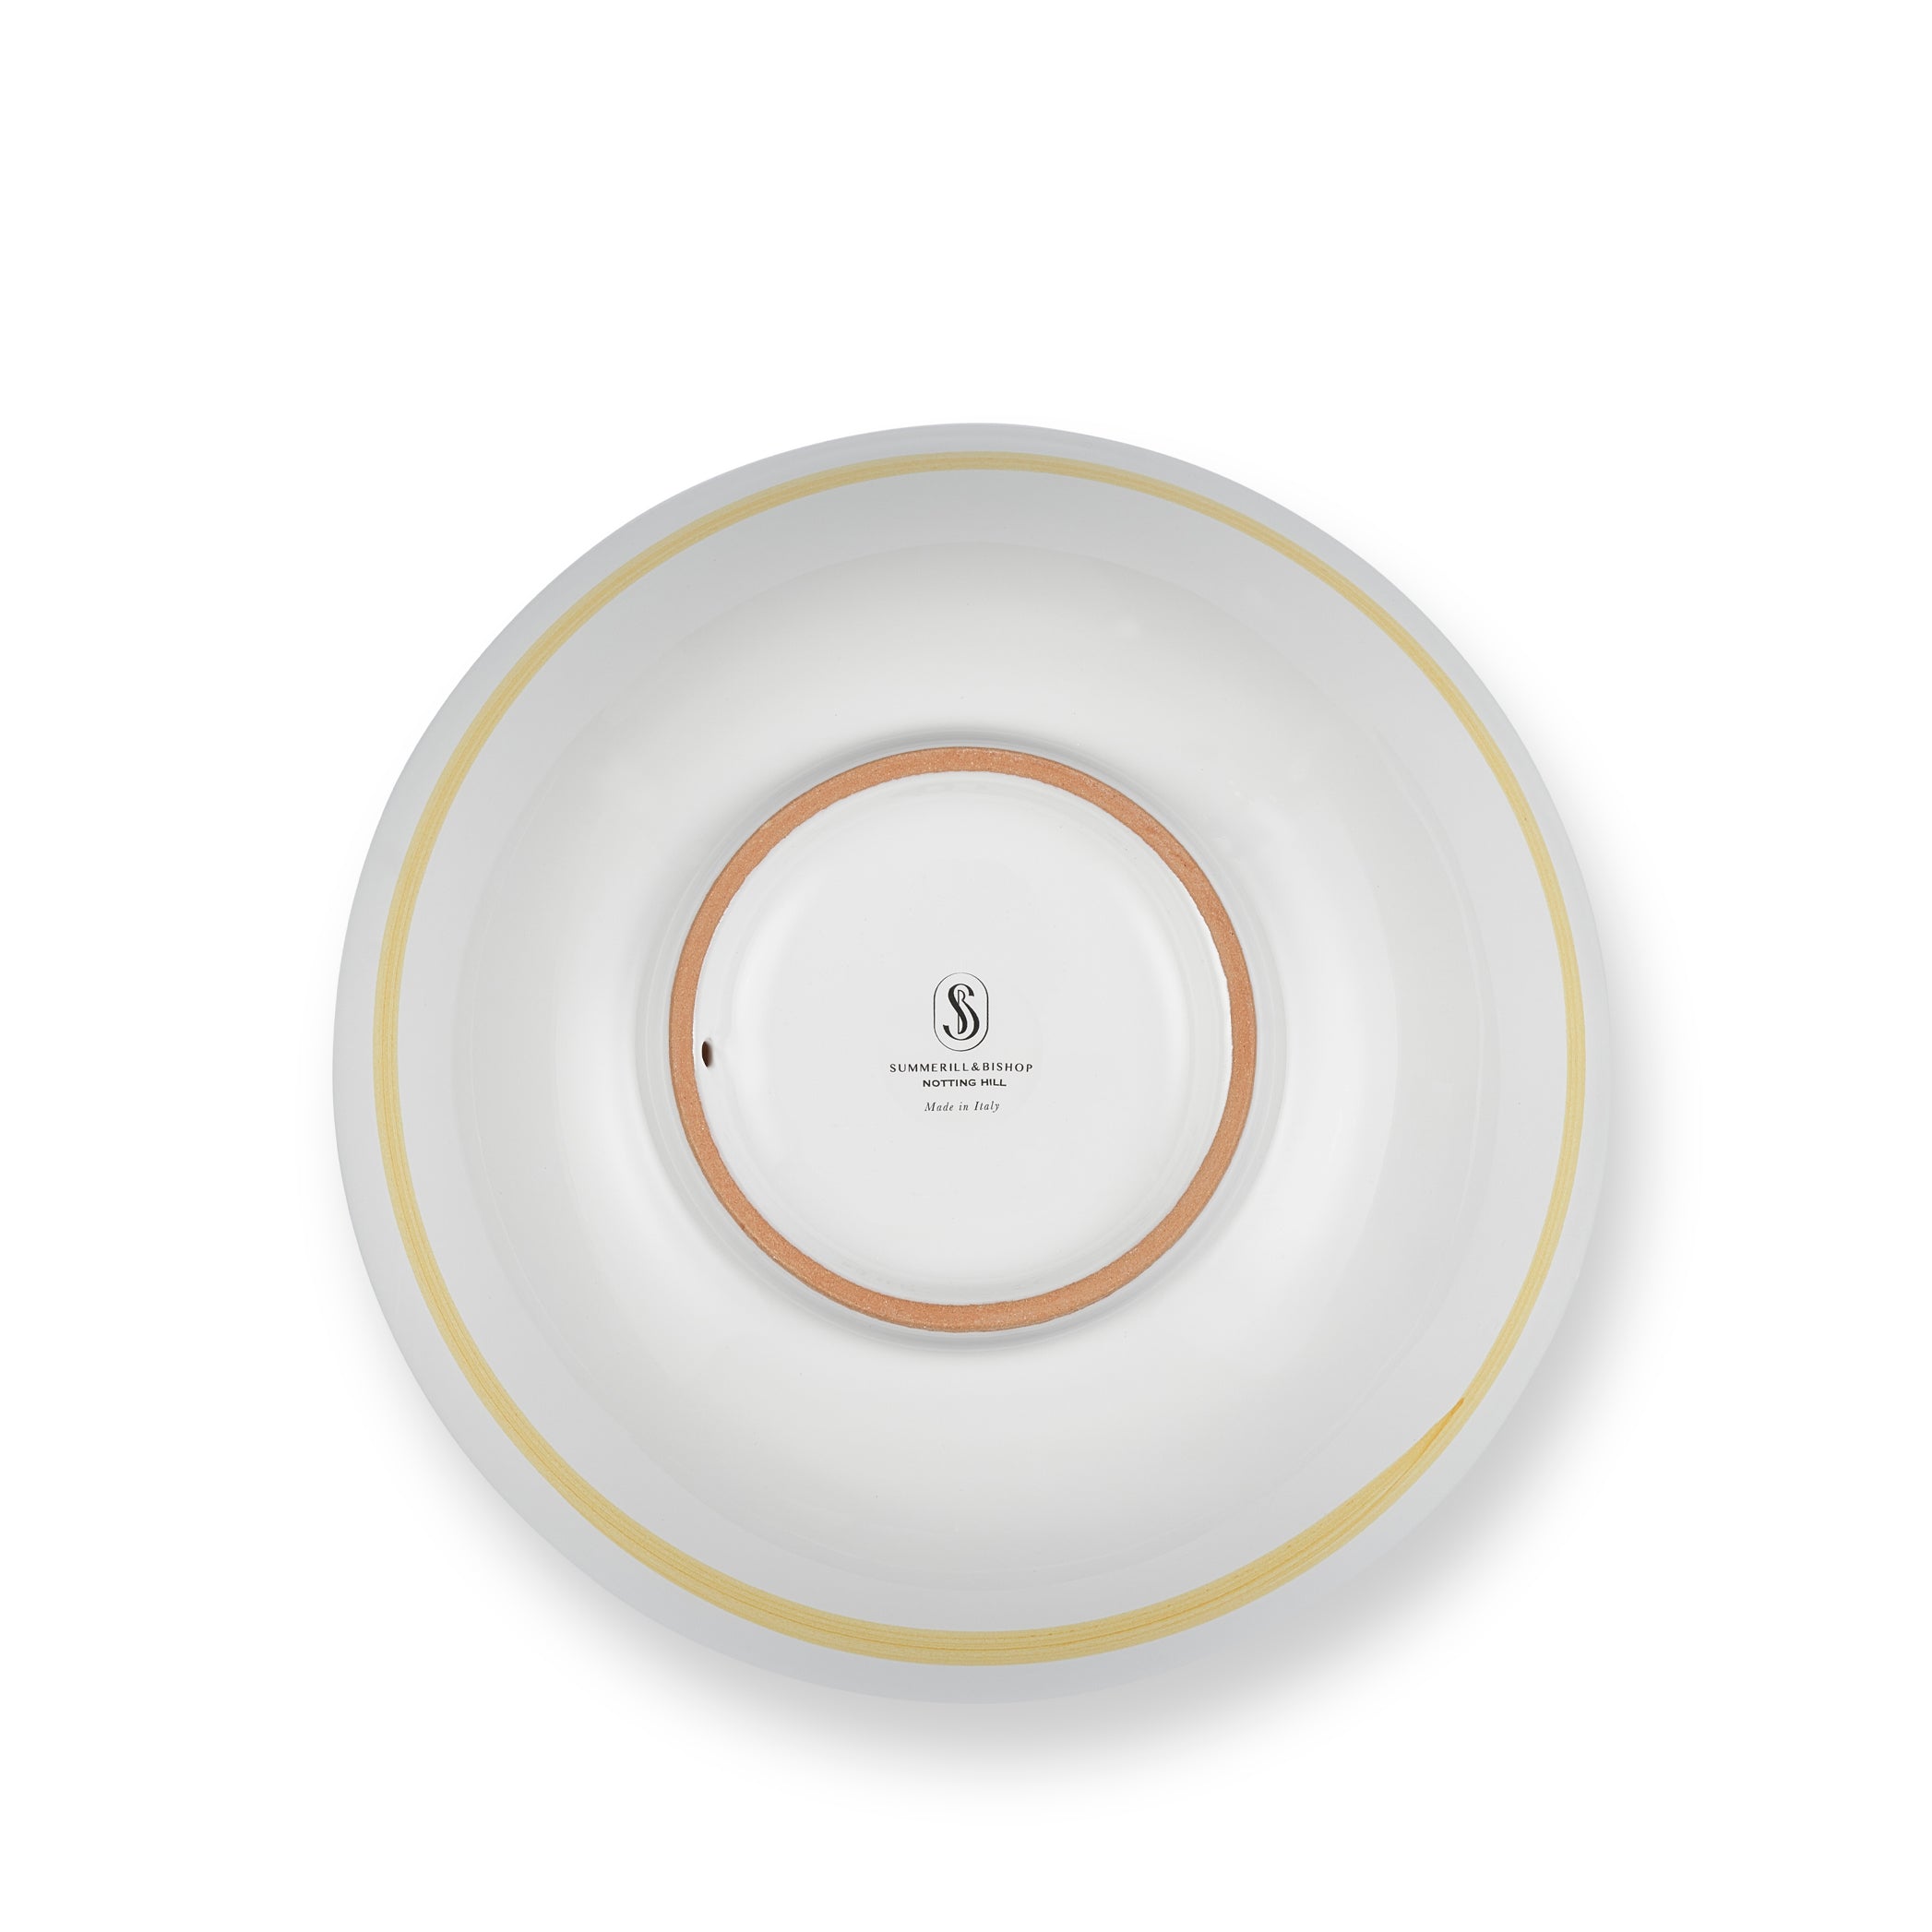 S&B 'Brushed' Ceramic Serving Bowl in Yellow, 30cm